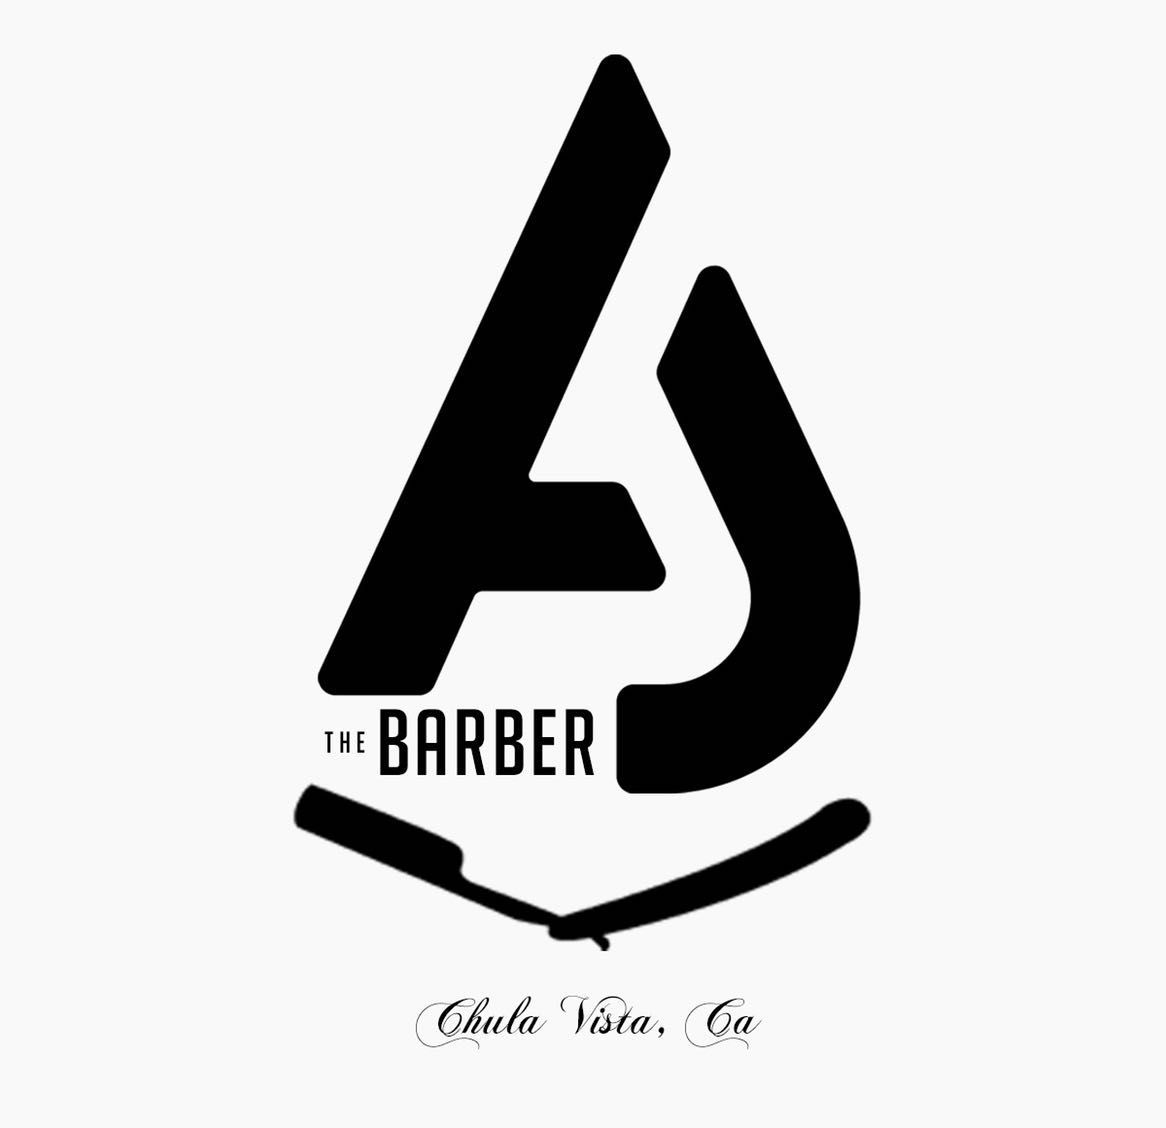 Aj Creer Royalty Barber Studio, 424 broadway, Chula Vista, 91910